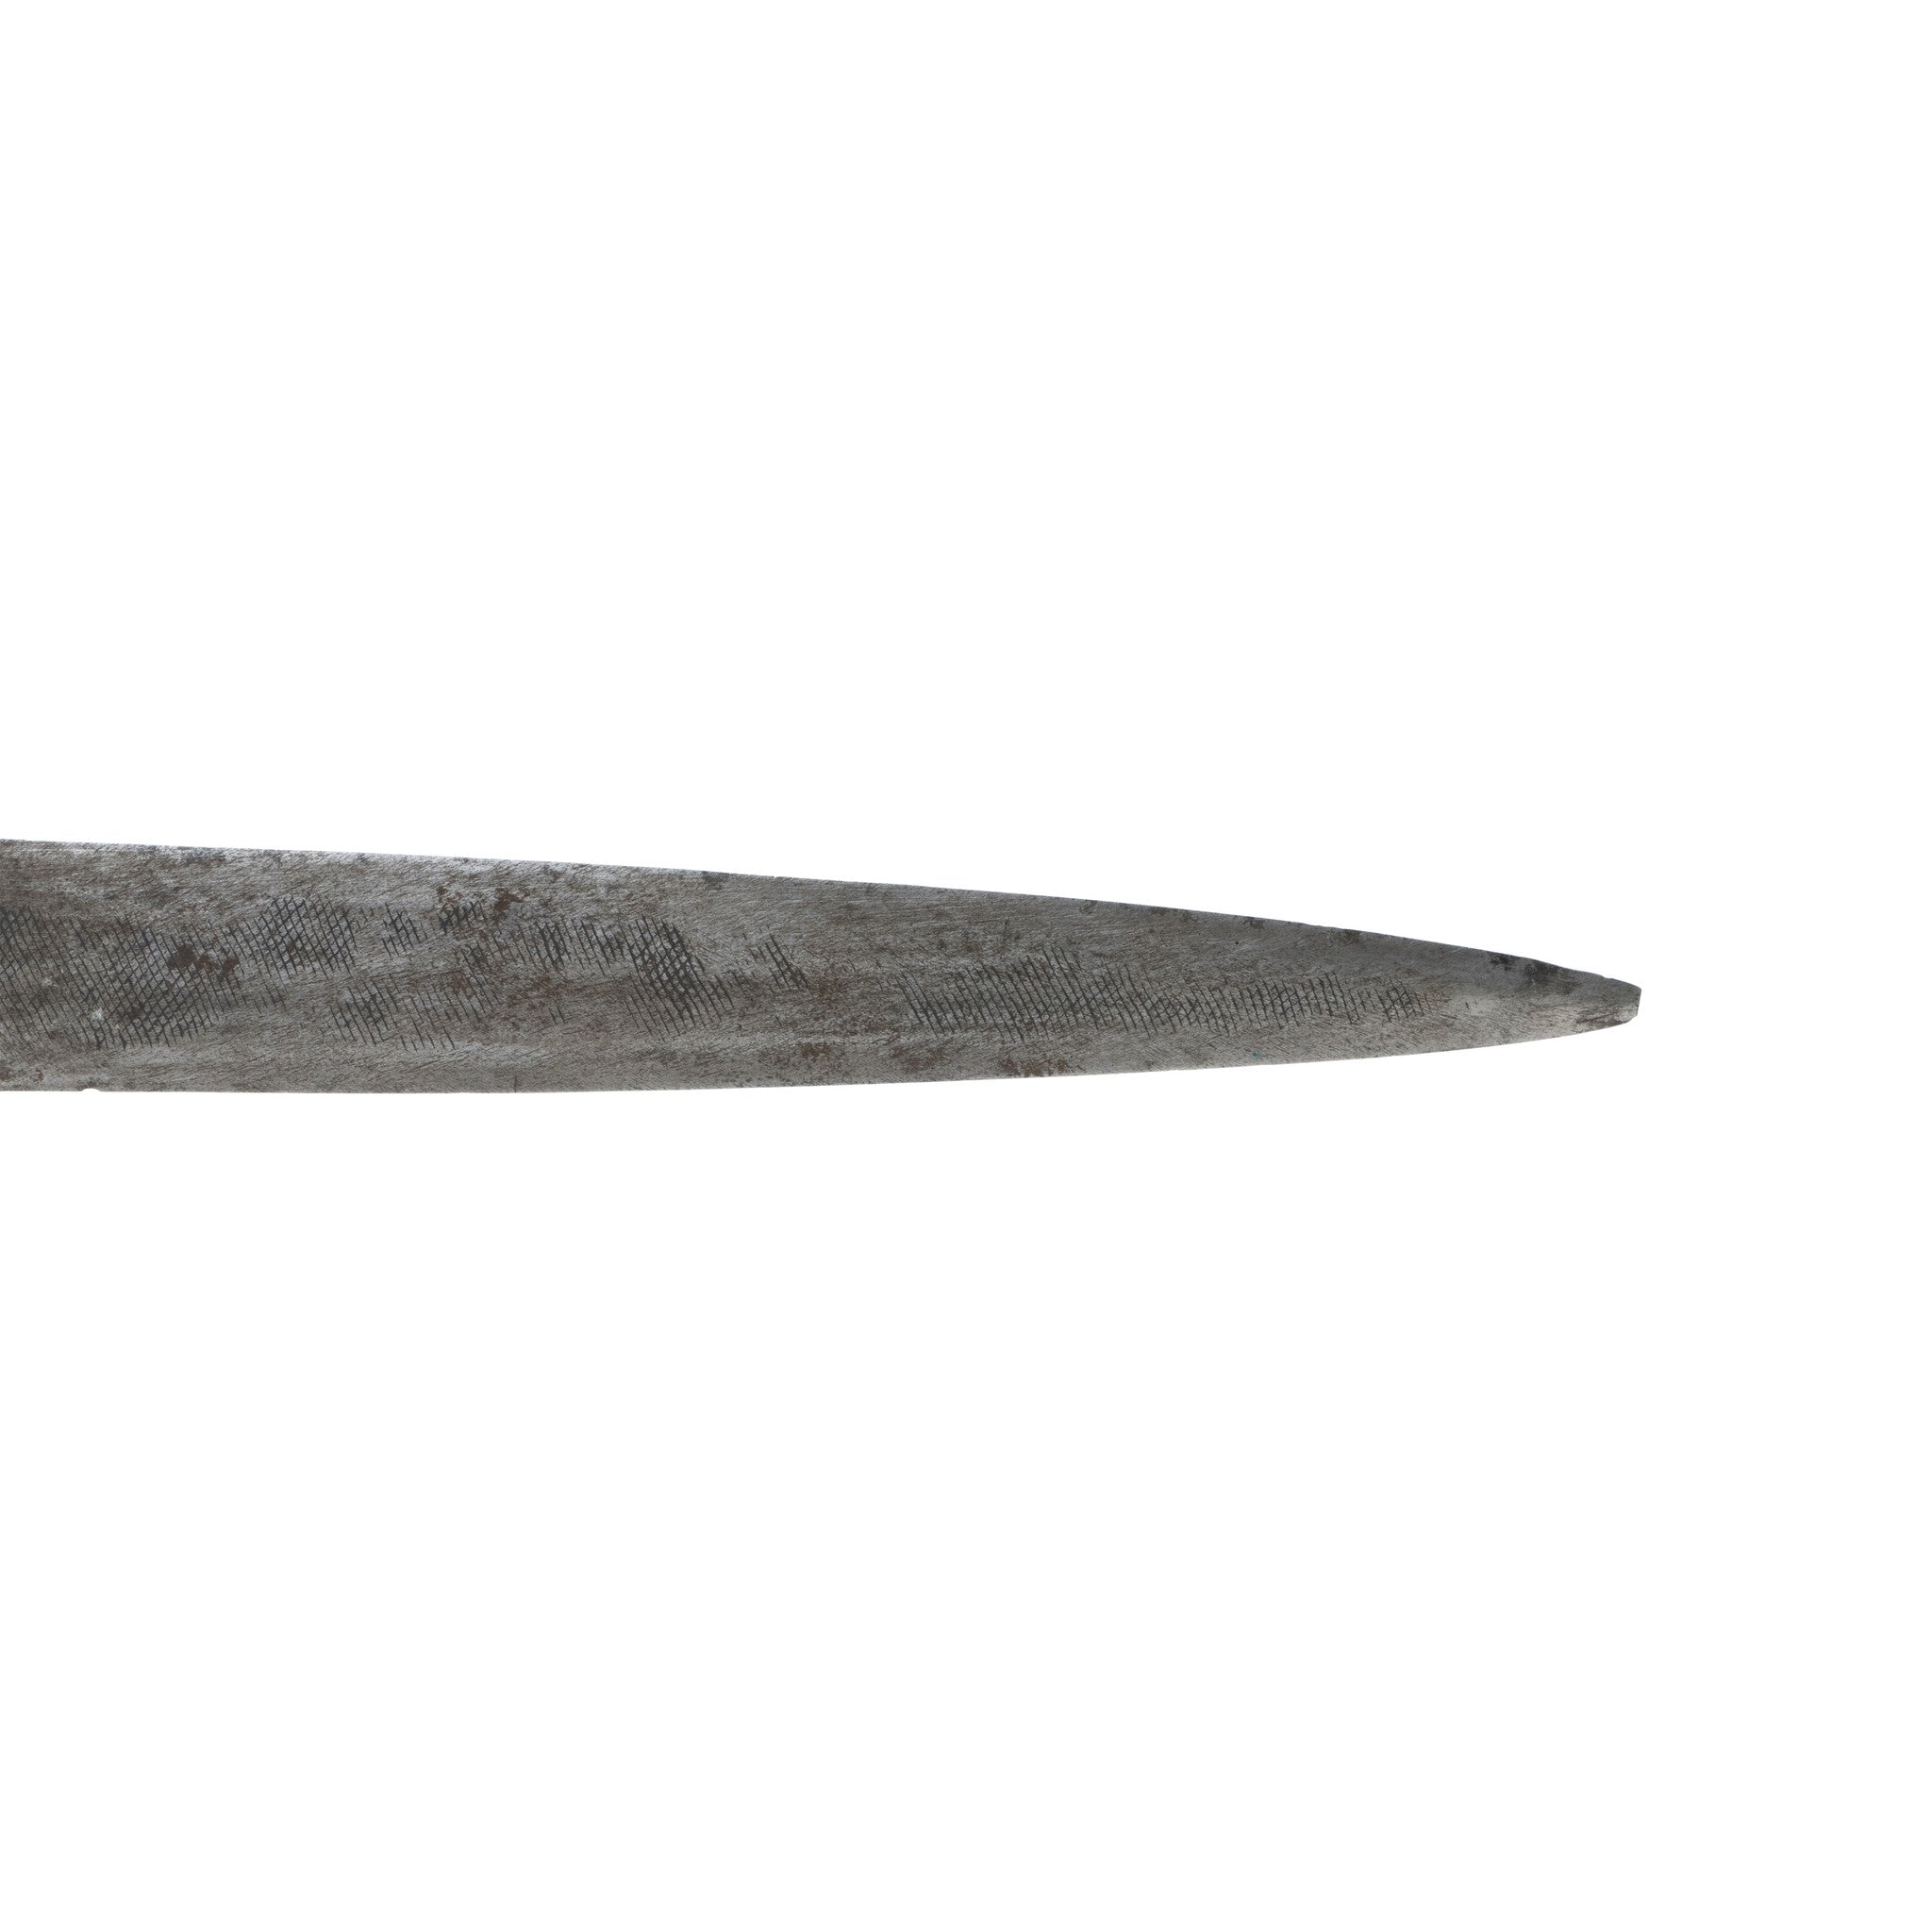 Indian War Era Knife